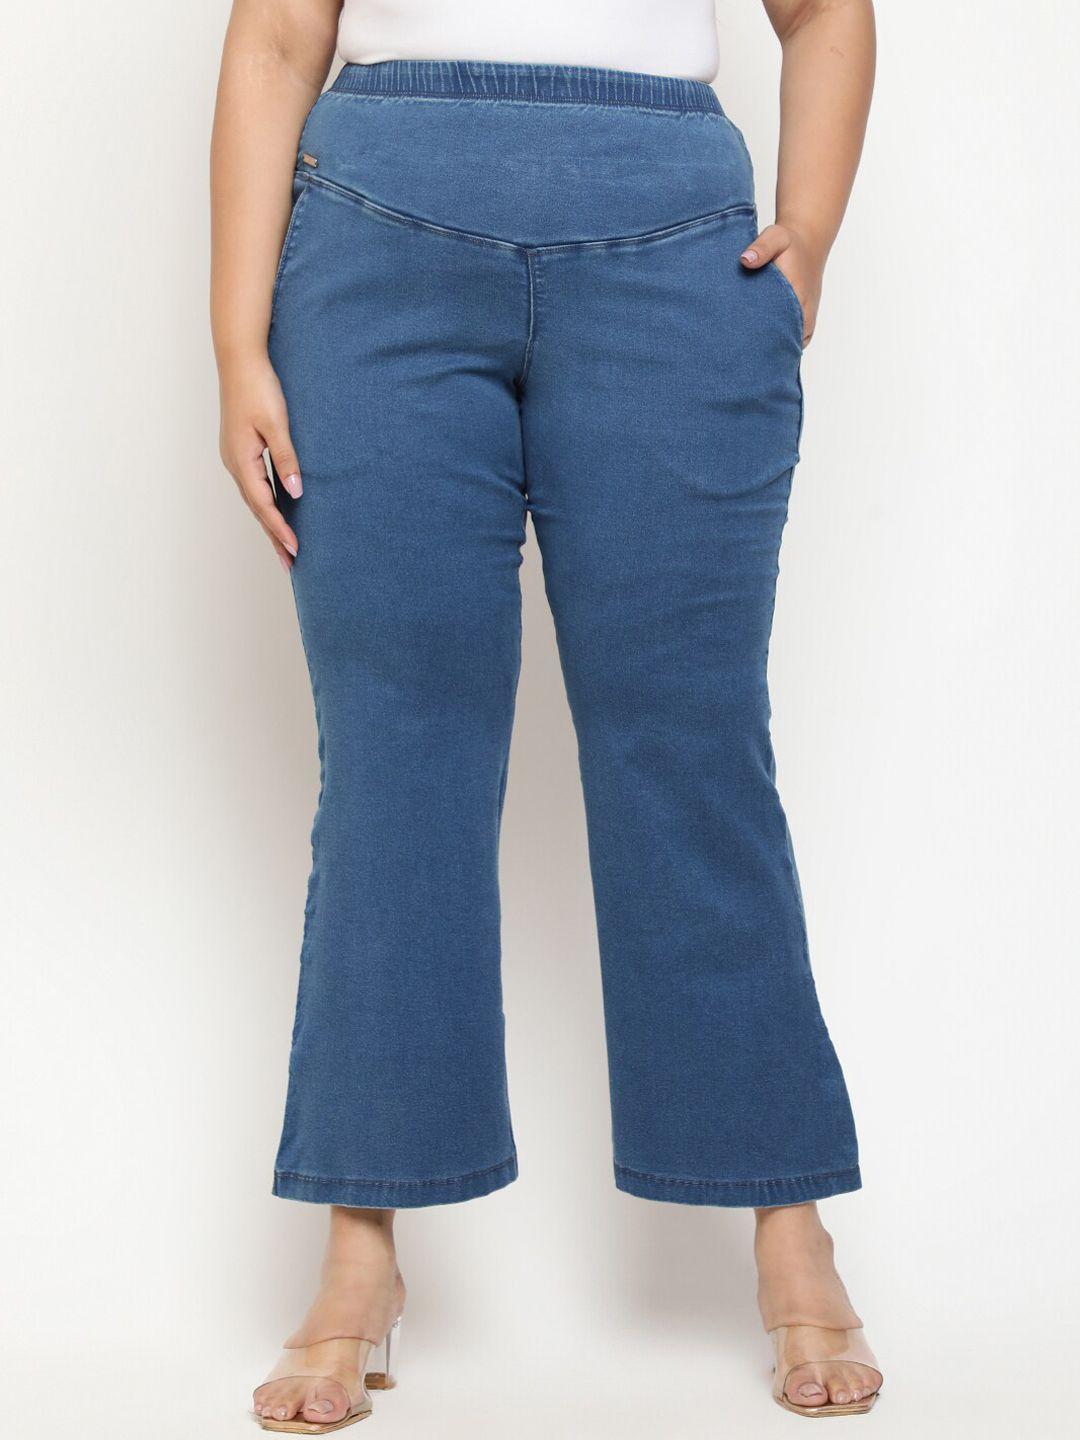 amydus women bootcut high-rise cotton stretchable jeans